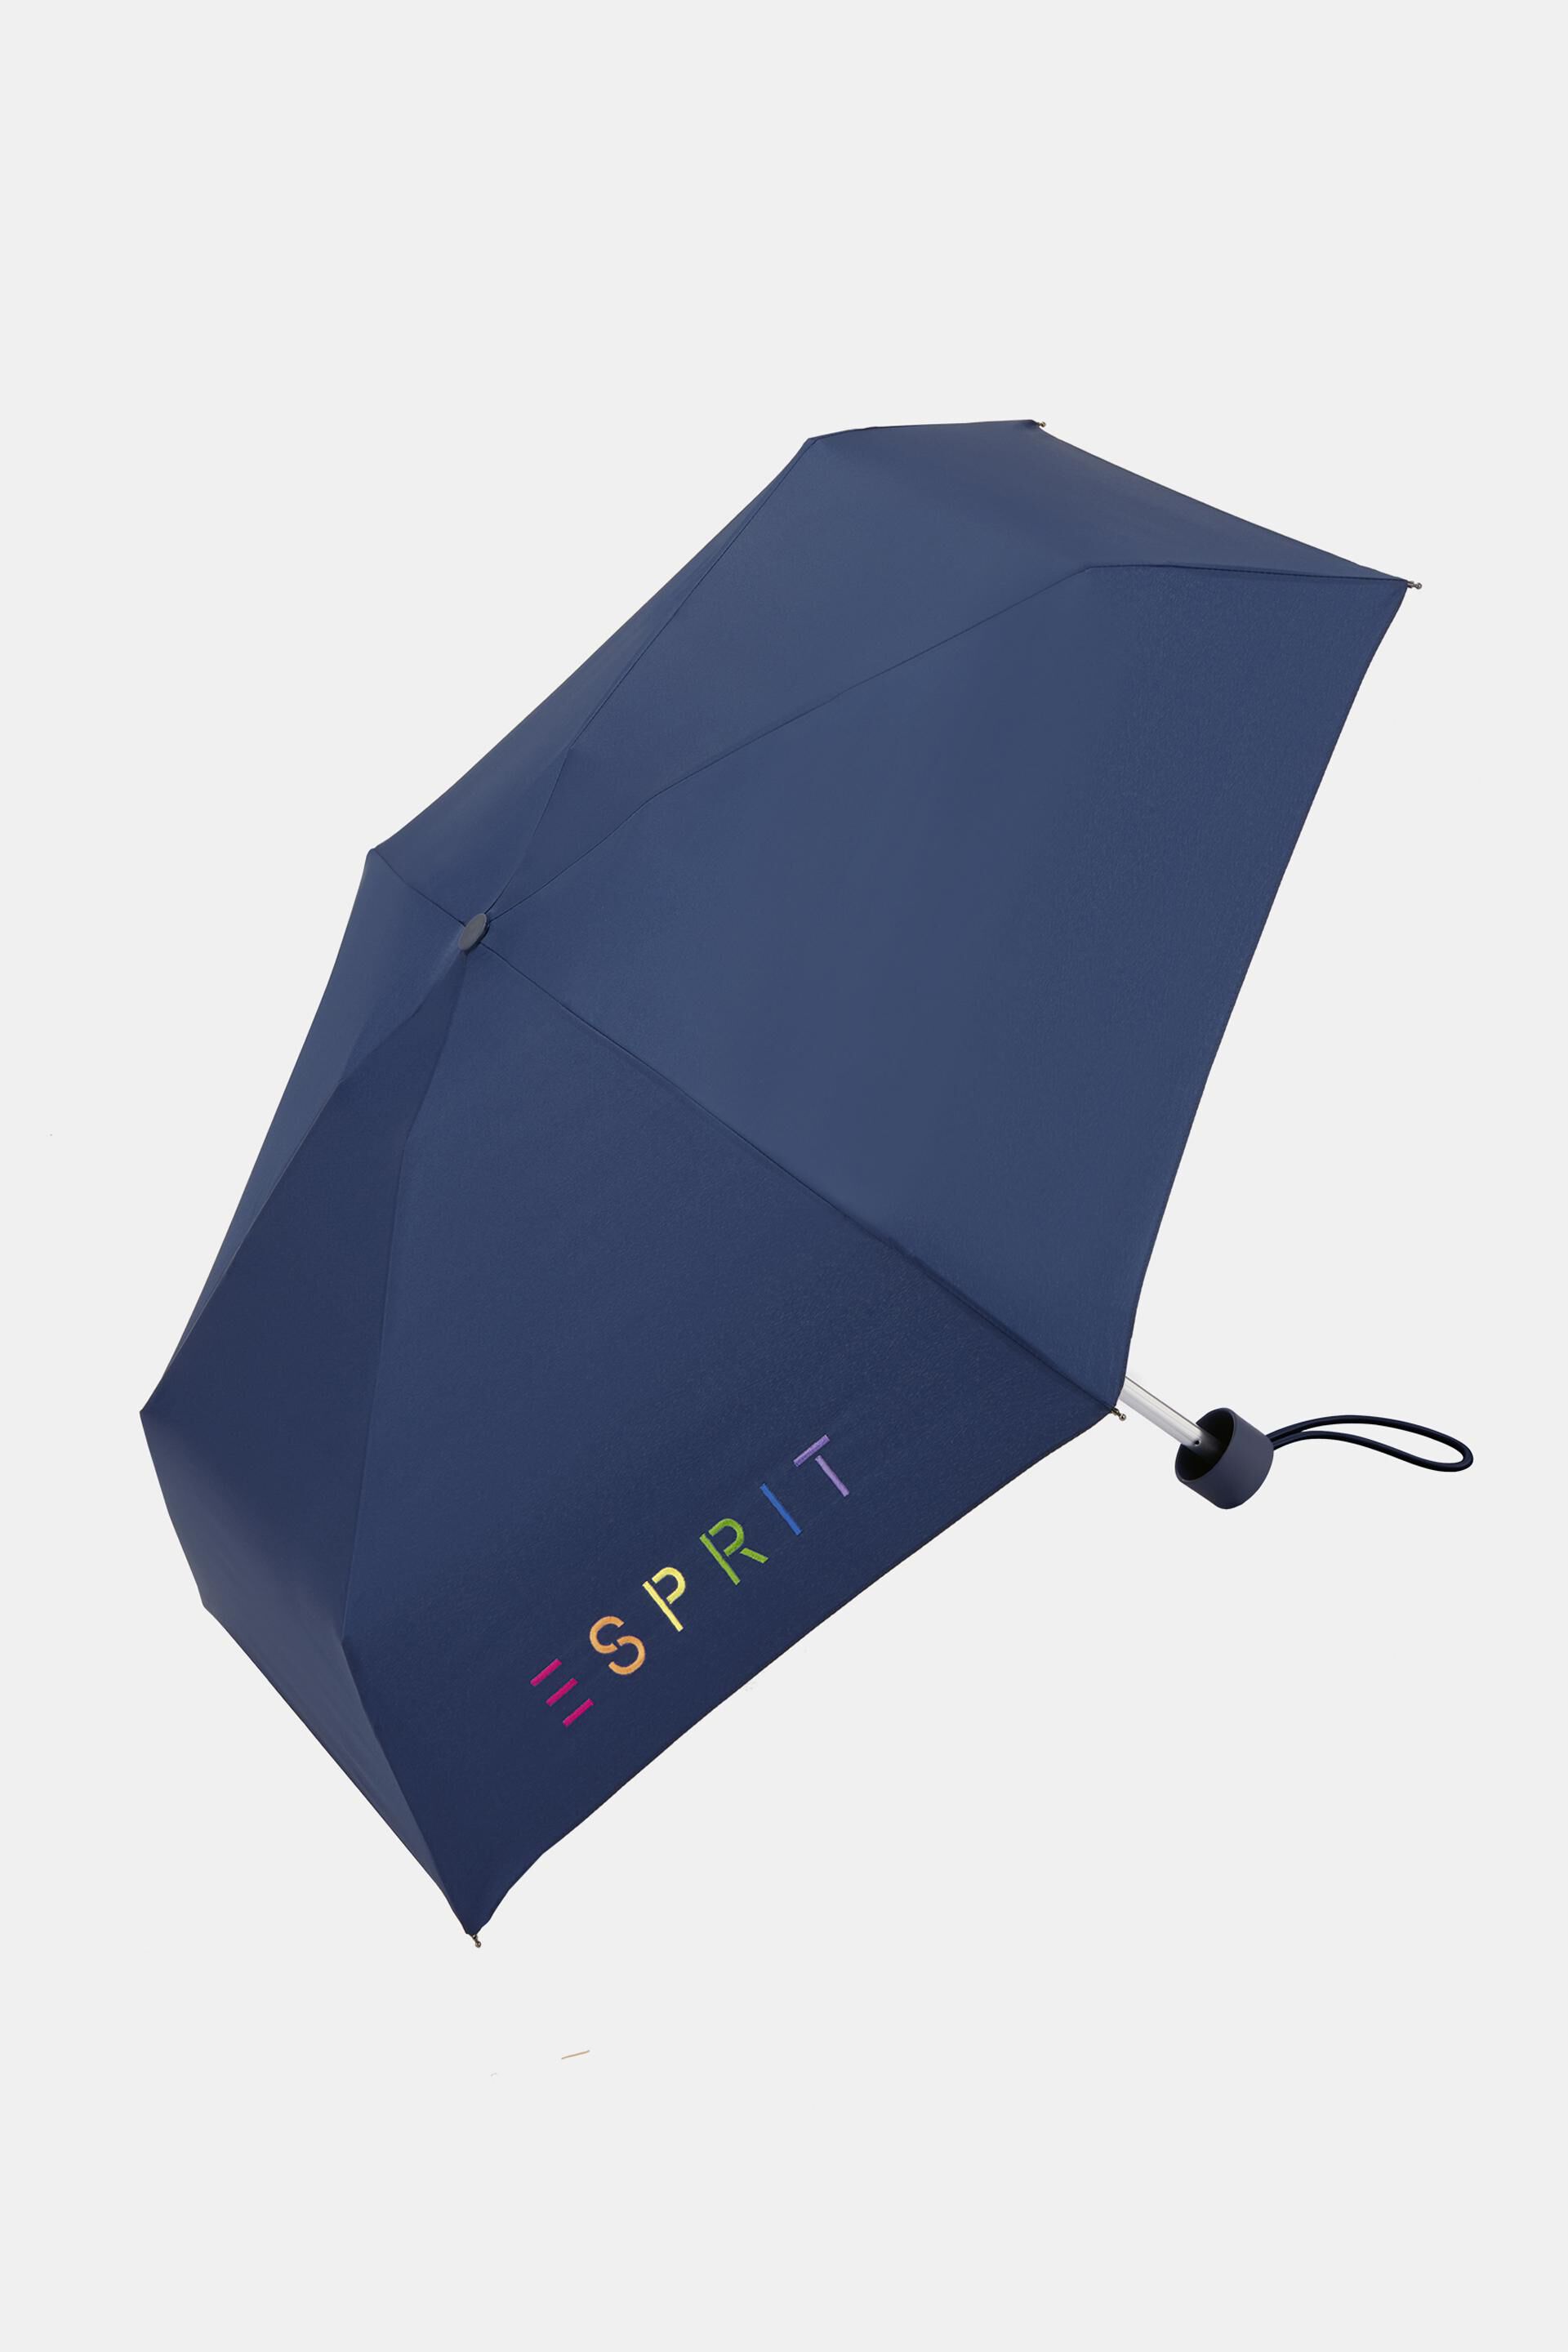 Esprit Online Store Ultra mini pocket umbrella with zip pouch